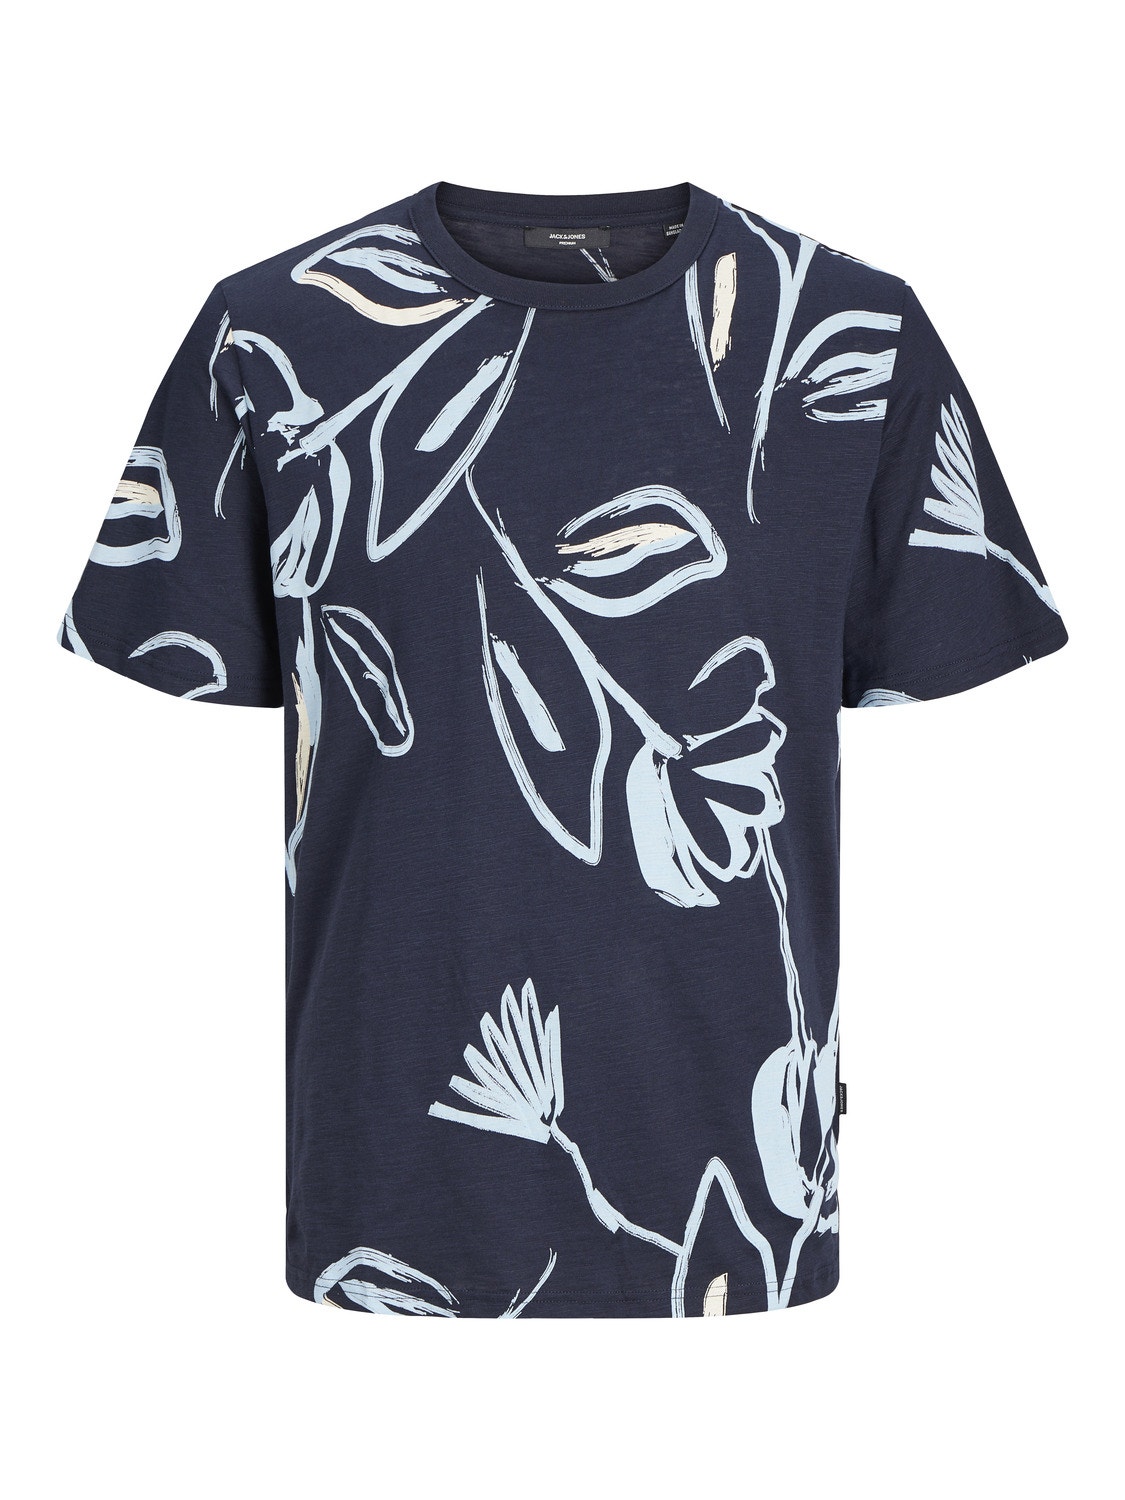 Jack & Jones All Over Print Rundhals T-shirt -Navy Blazer - 12253552